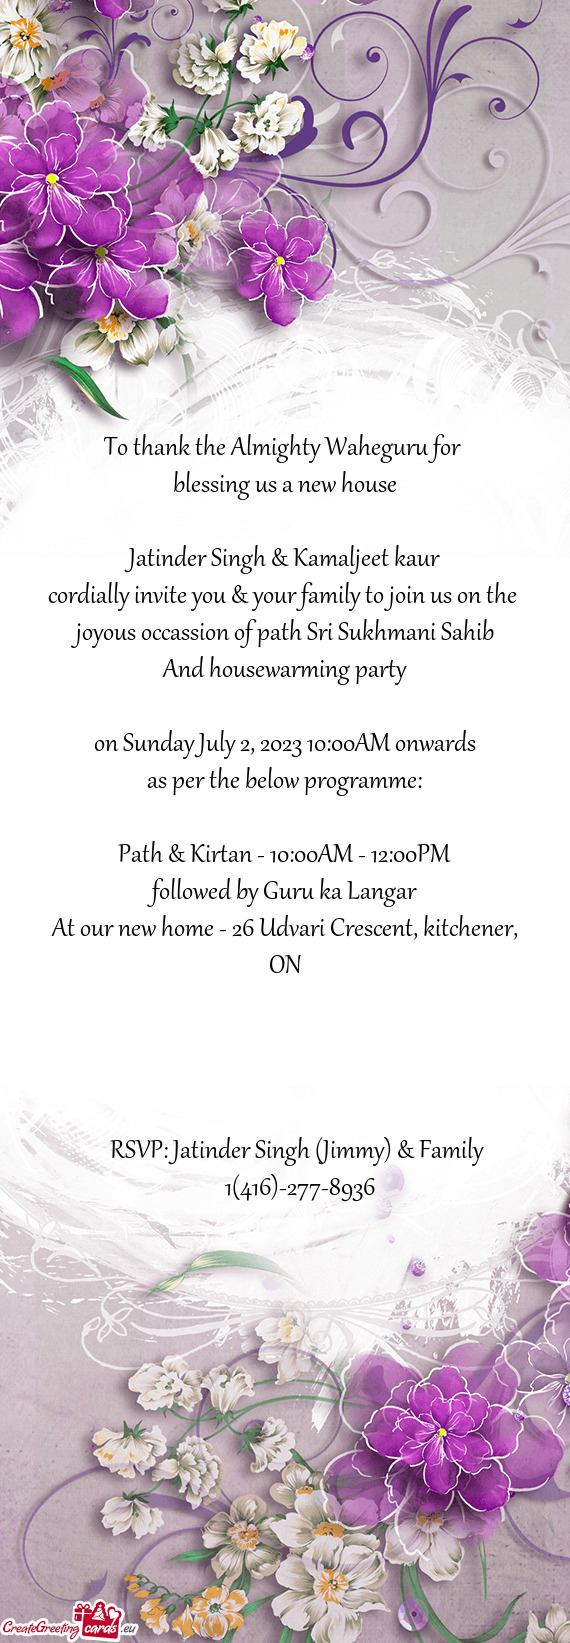 Jatinder Singh & Kamaljeet kaur